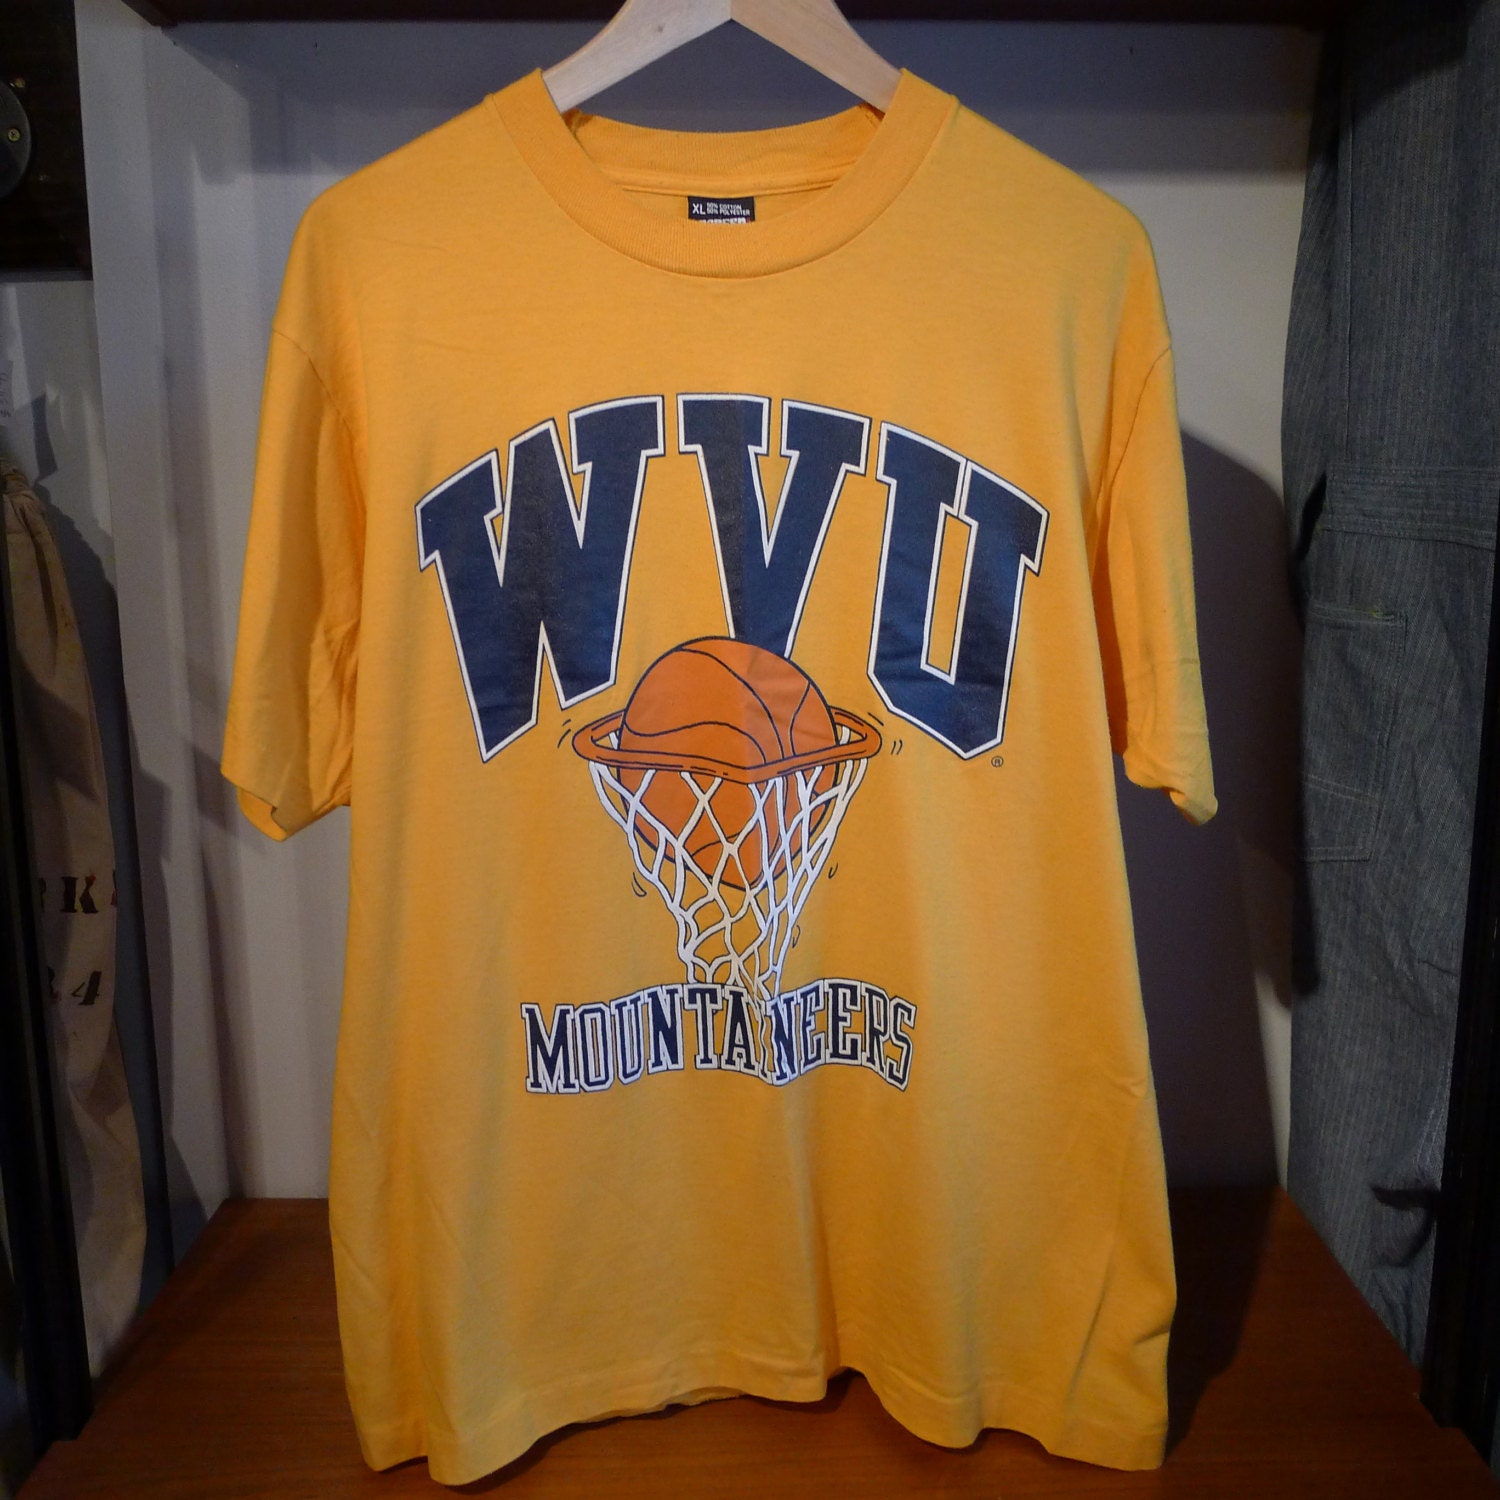 Vintage WVU MOUNTAINEERS Shirt West Virginia University